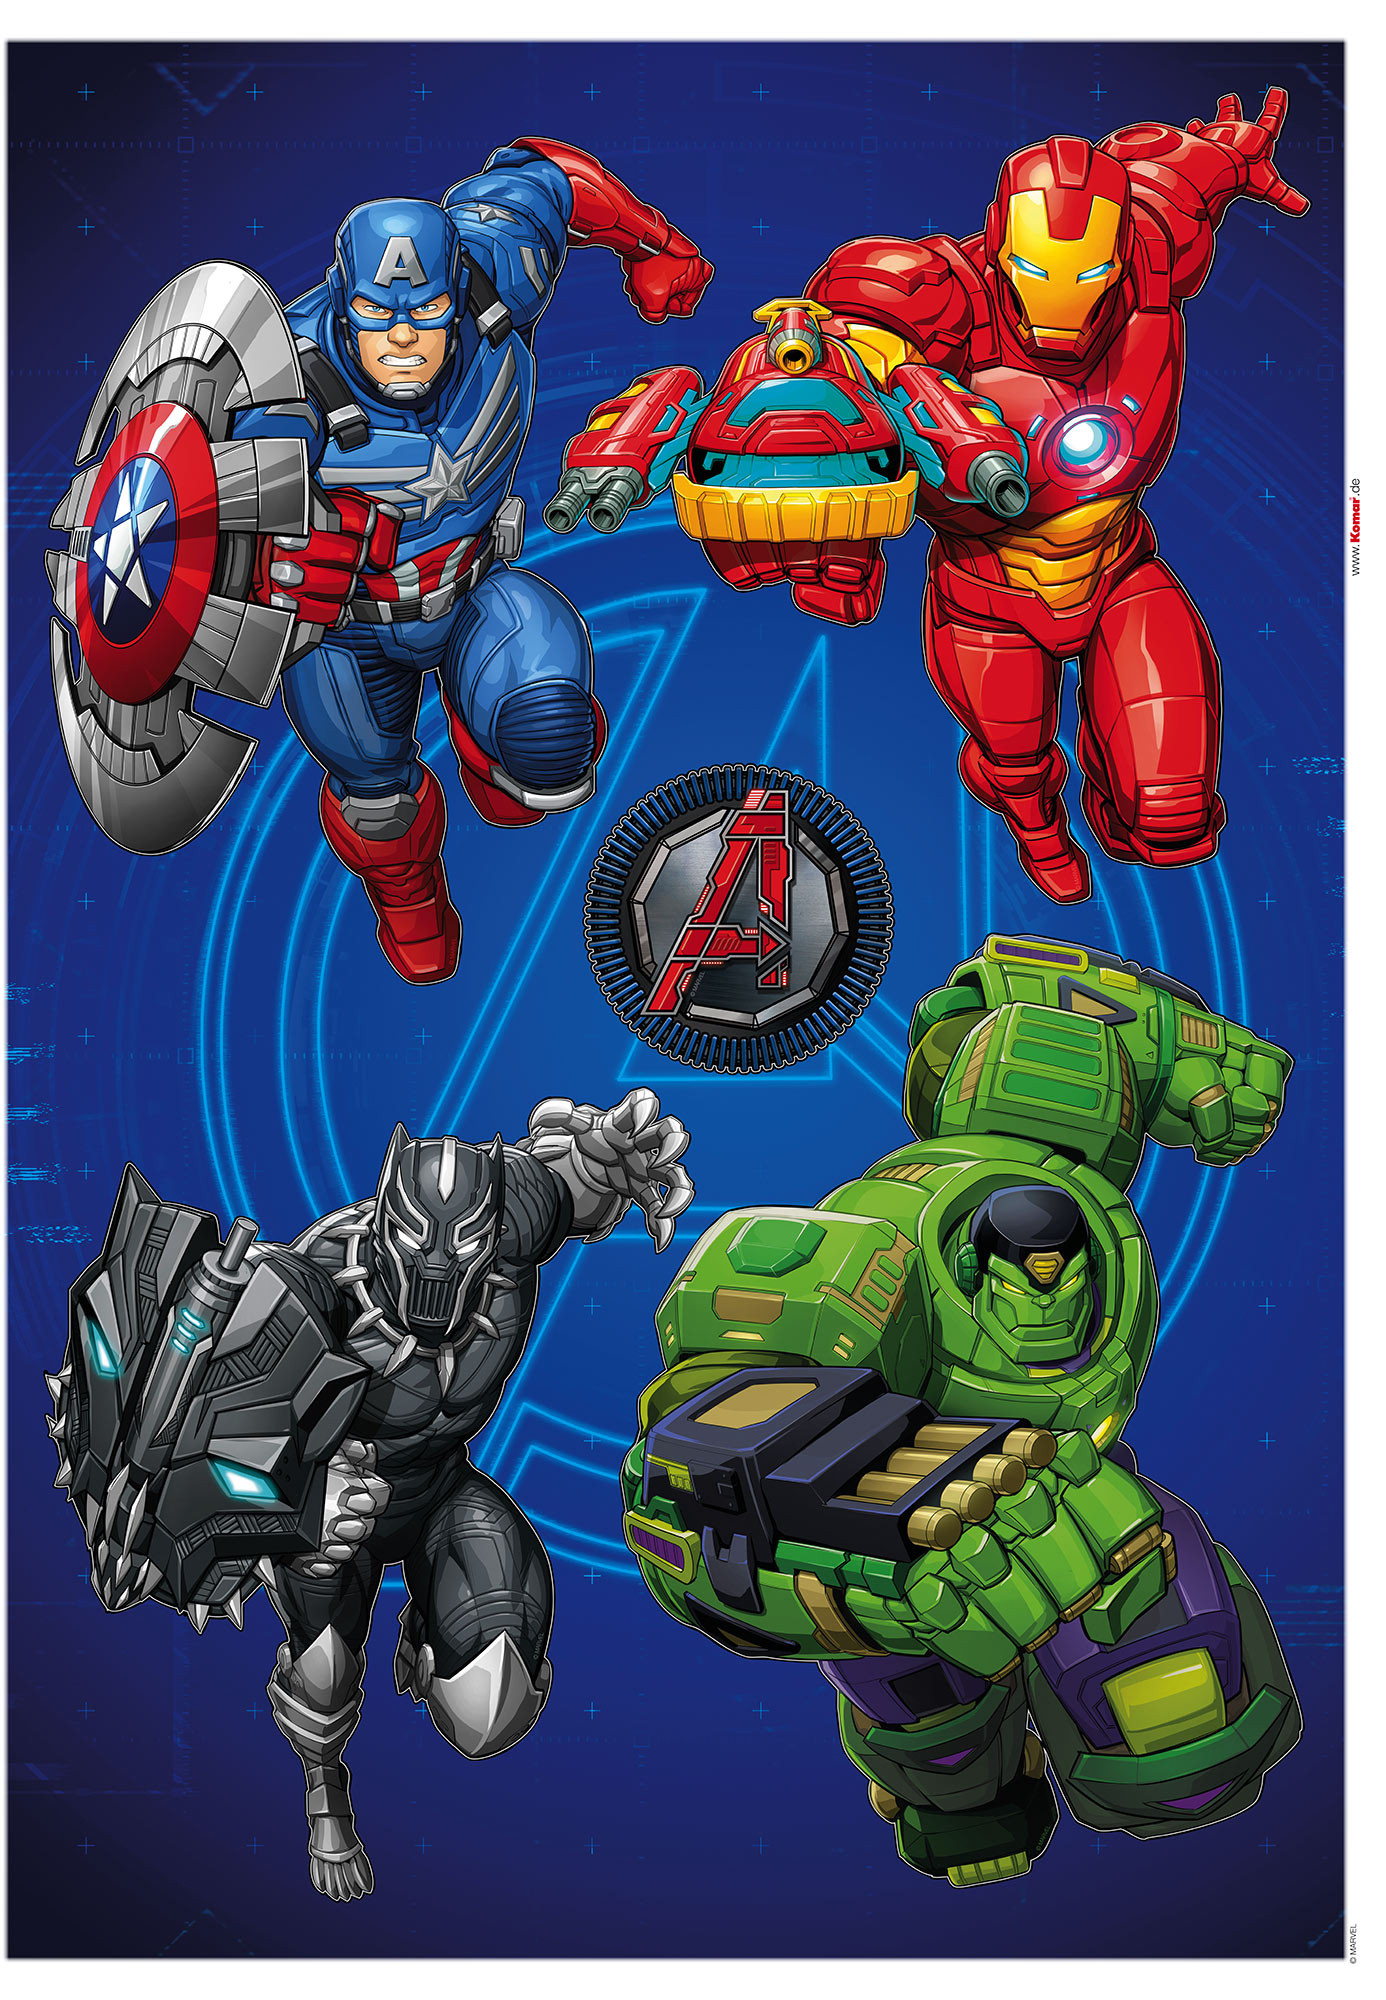 Avengers Mech Strike - Figurine Captain America ou Iron Man